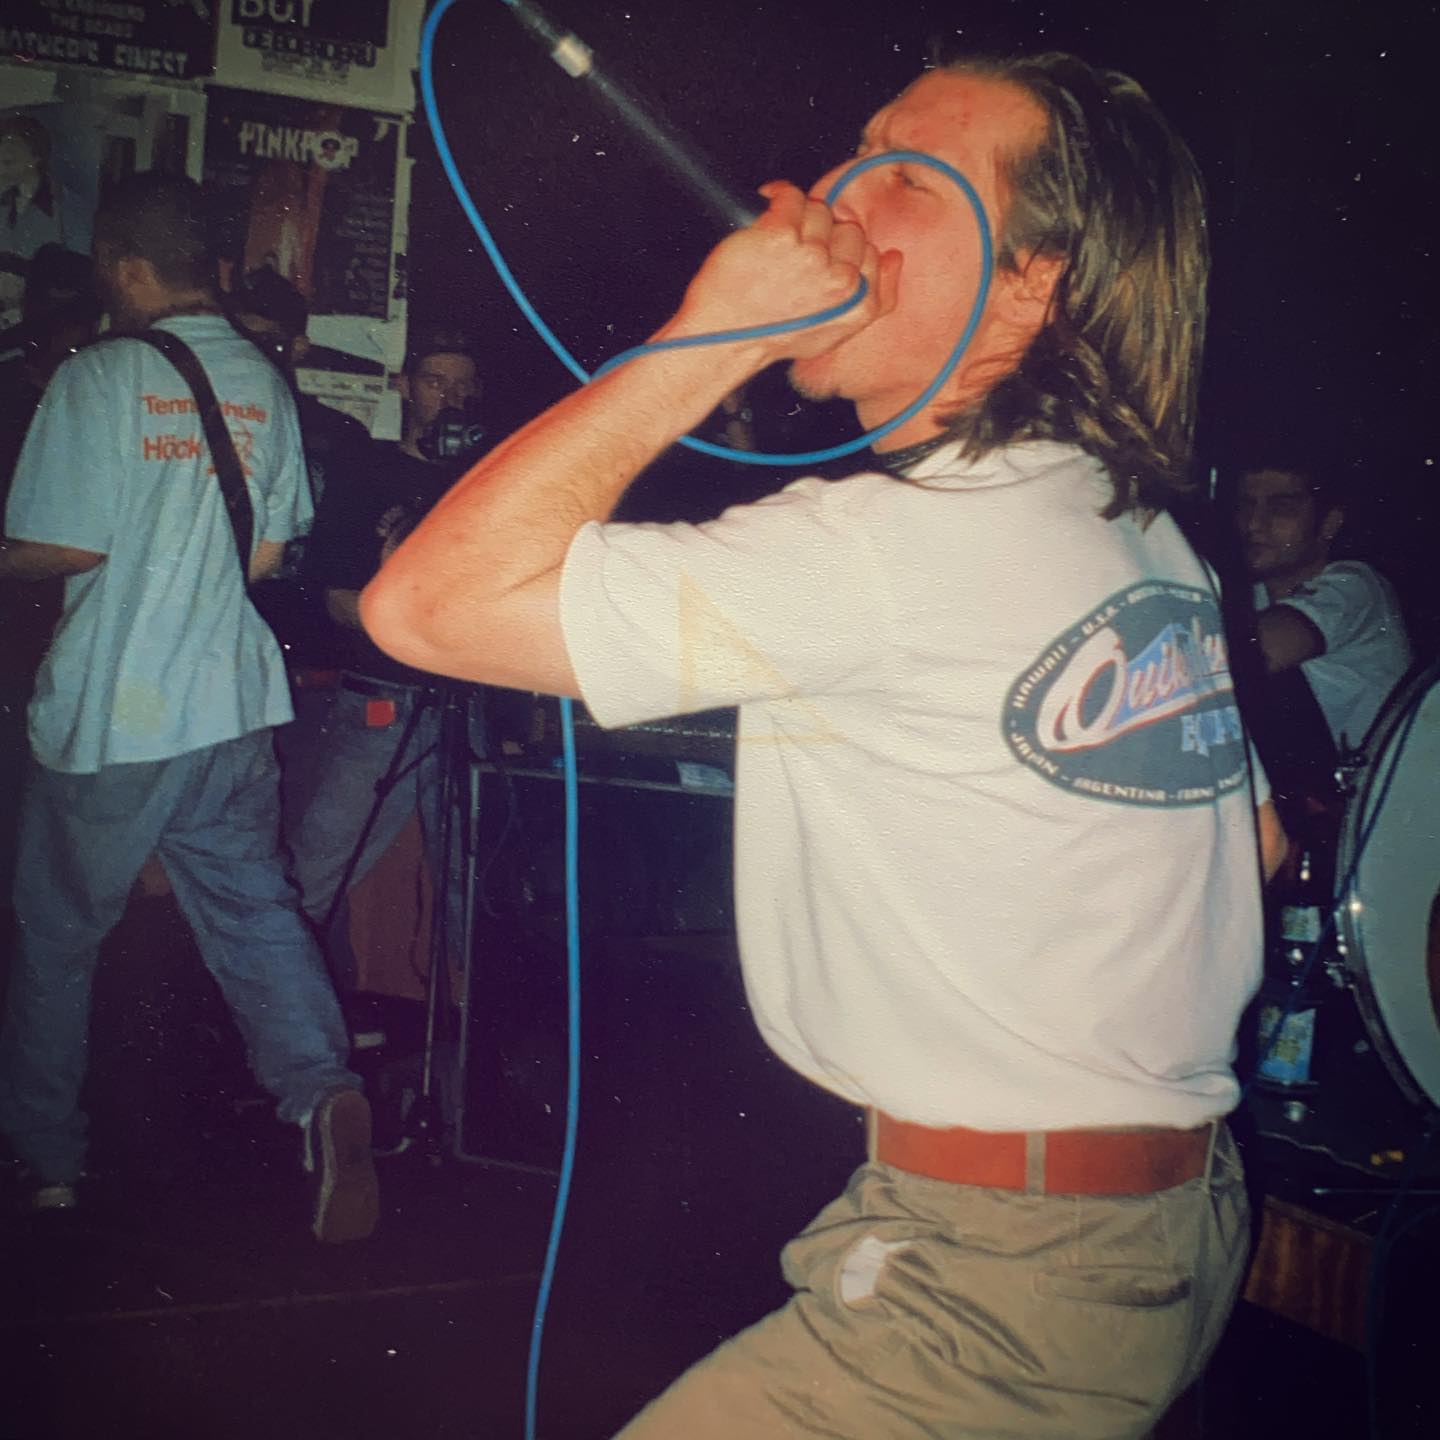 Pole* - Hardcore fest Geleen - 8/9 March 1997 #straightedge #hardcore #punkrock @pole_straightedge @xthreesomex @lookingback_ography #gigpic by @twentylandcrew